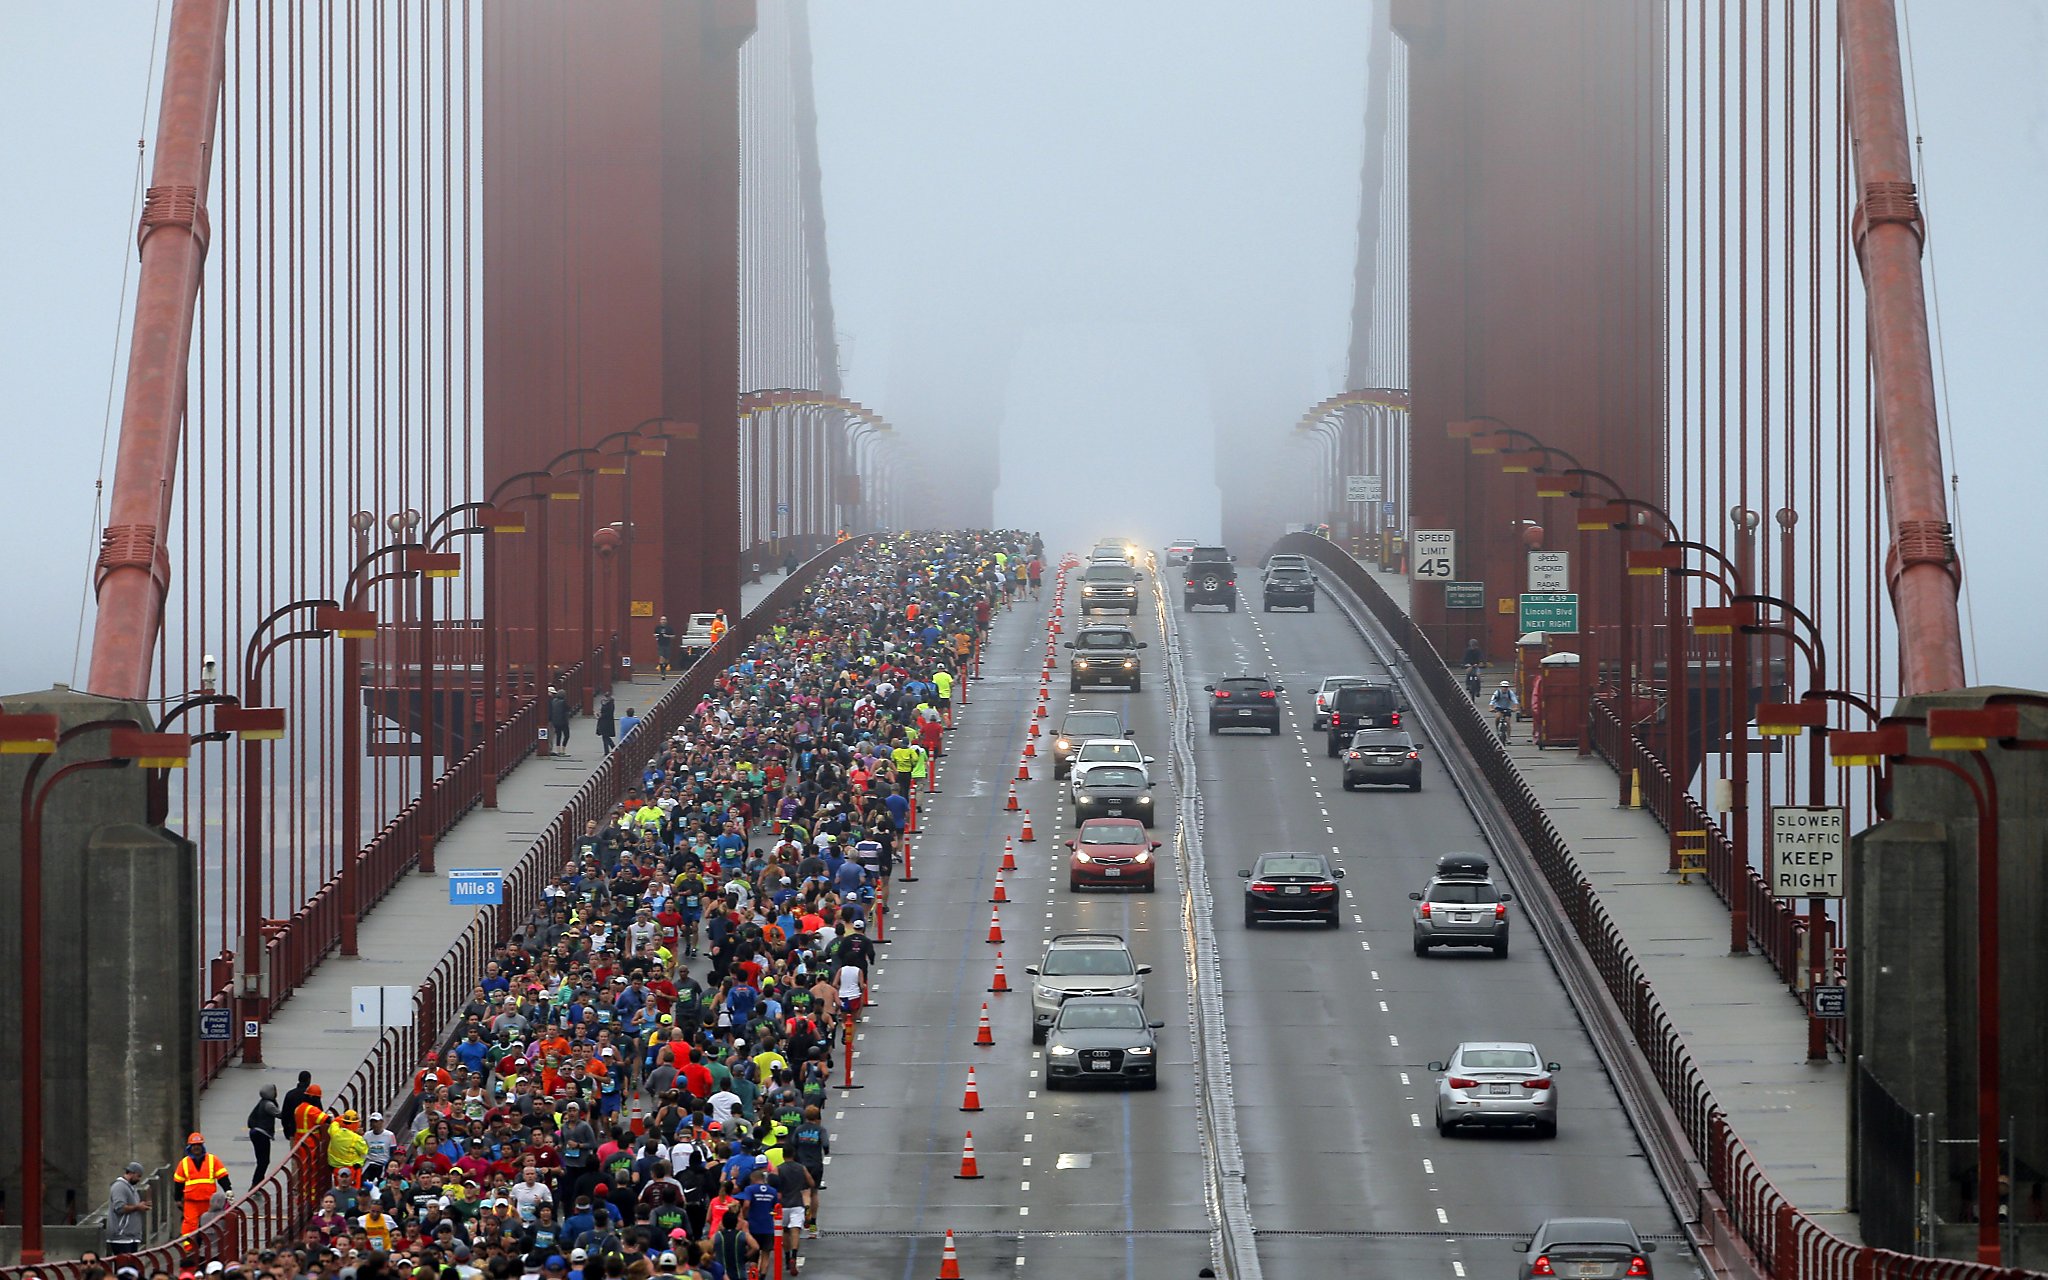 This month’s SF Marathon runs into obstacle at Golden Gate Bridge